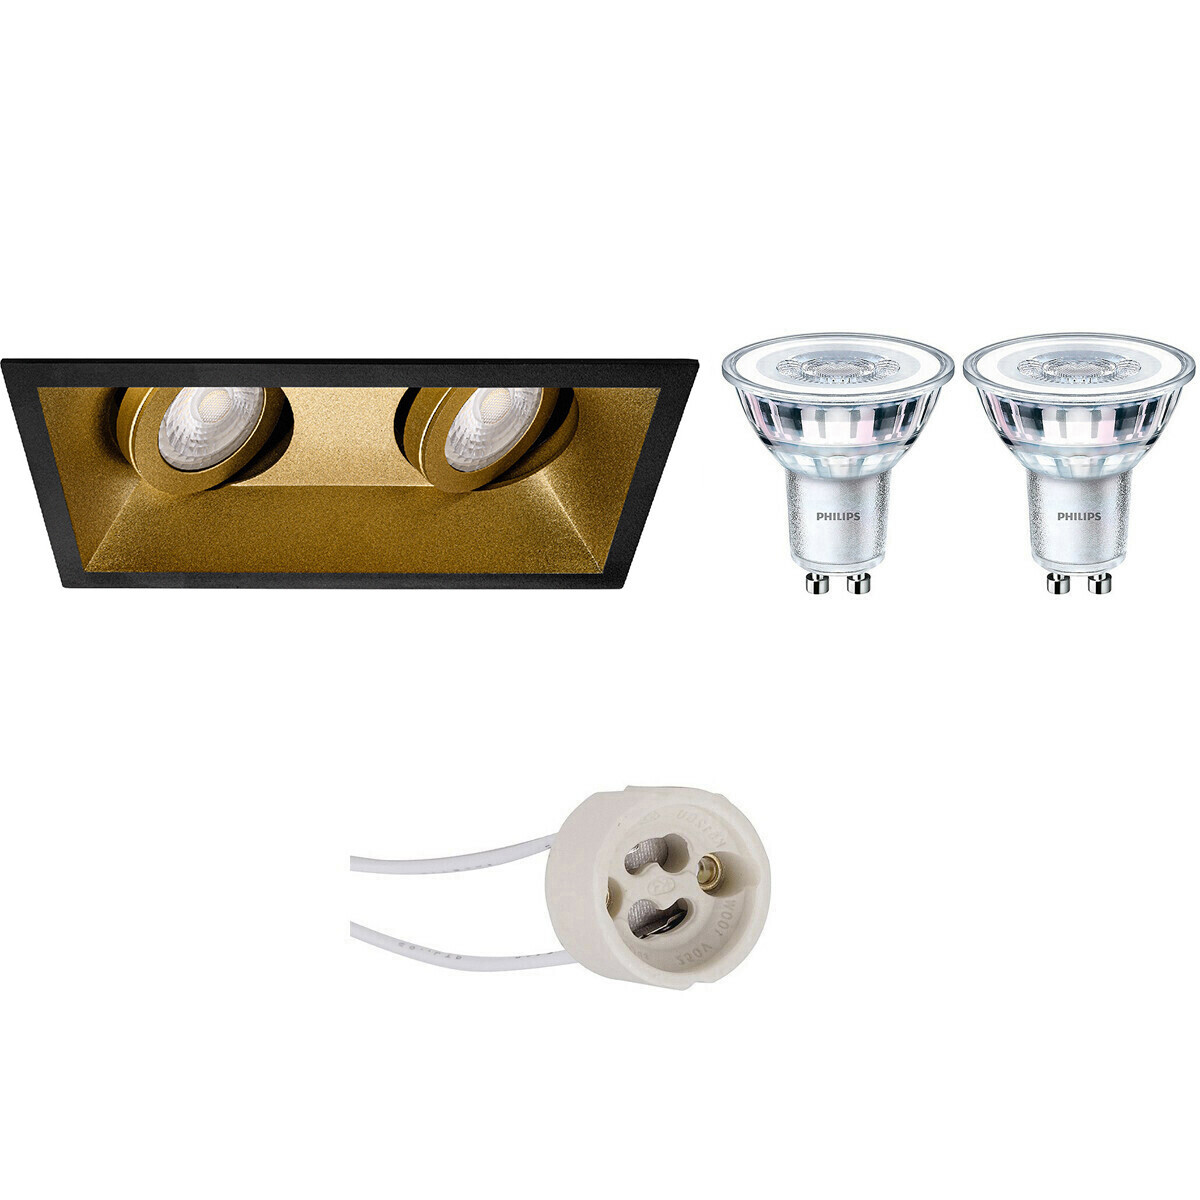 LED Spot Set - Pragmi Zano Pro - GU10 Fitting - Inbouw Rechthoek Dubbel - Mat Zwart/Goud - Kantelbaar - 185x93mm - Philips - CorePro 830 36D - 5W - Warm Wit 3000K - Dimbaar